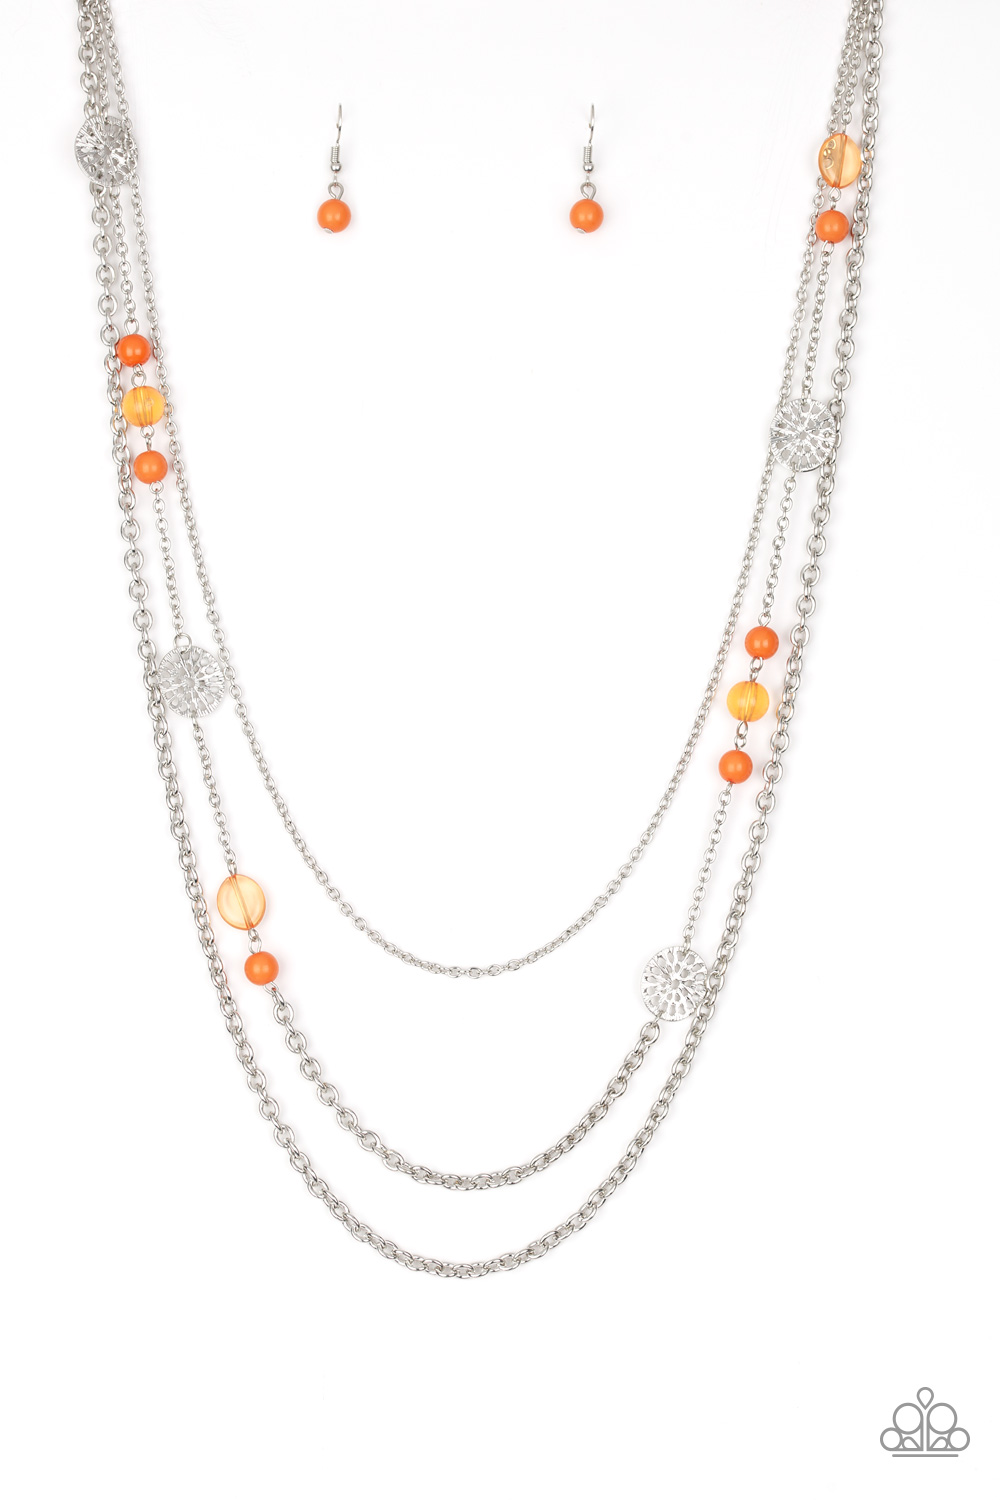 Necklace - Pretty Pop-tastic! - Orange